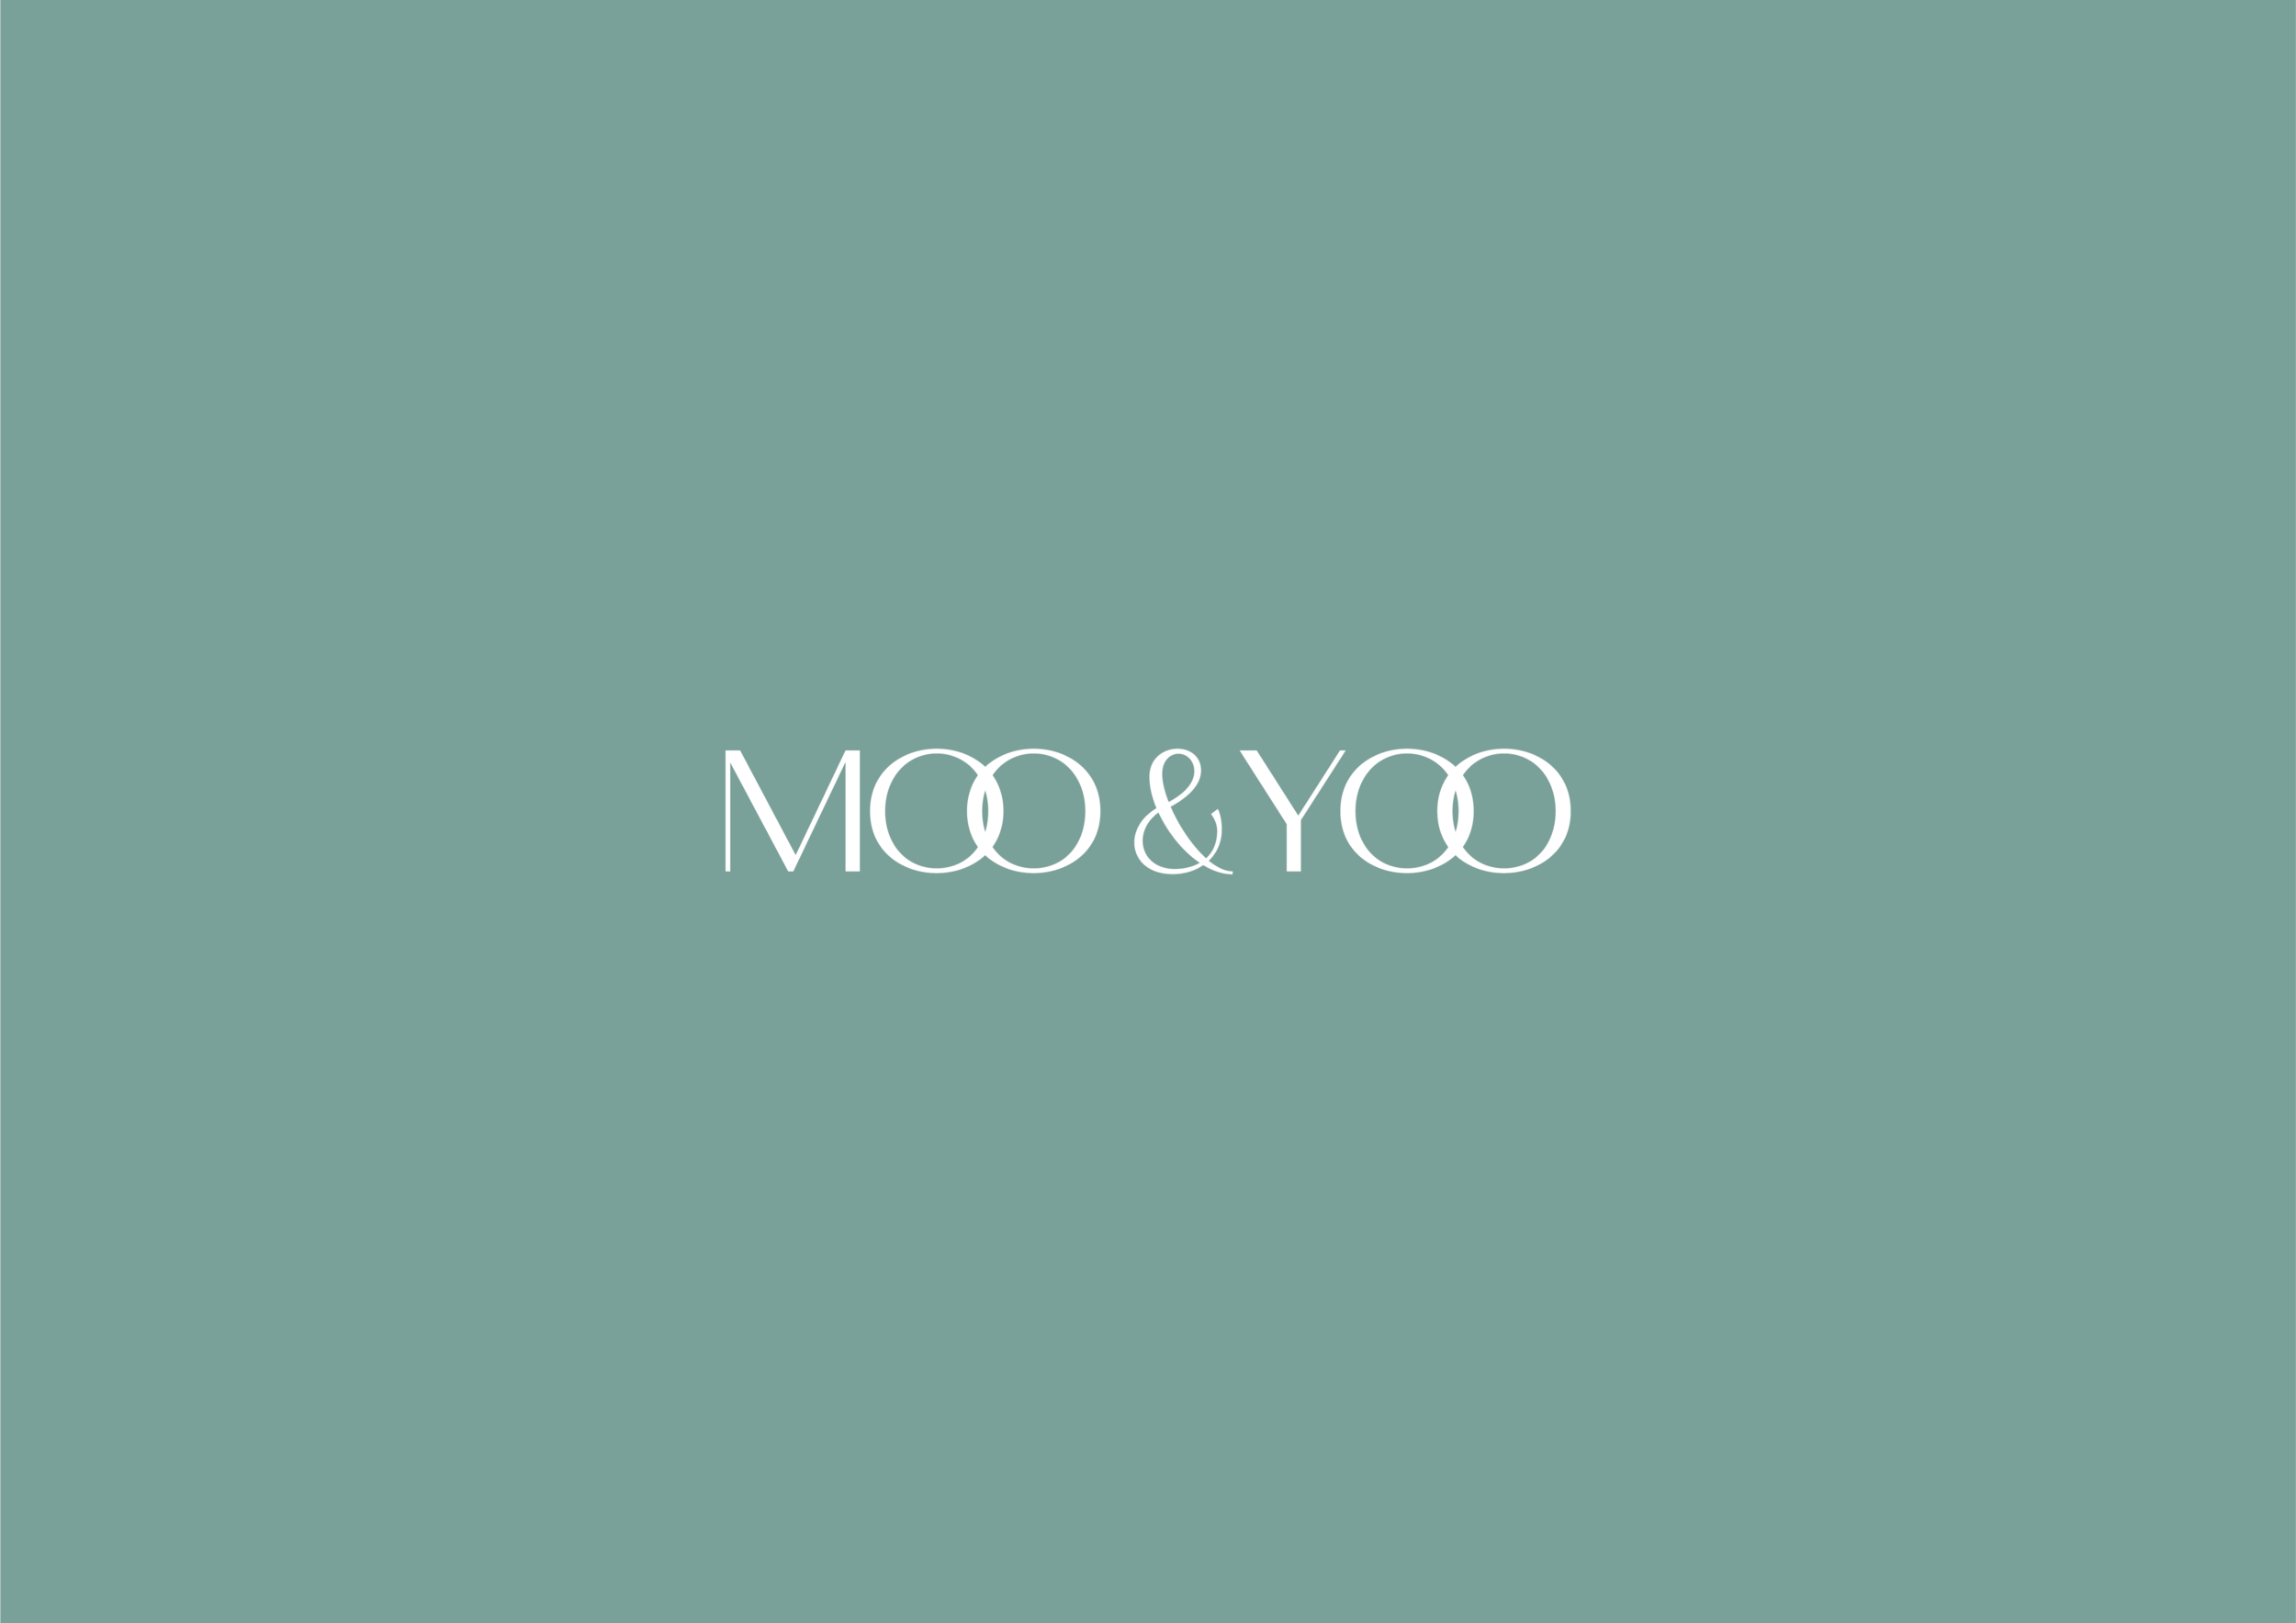 Branding design company UK. Moo &amp; Yoo company font logo with light green background